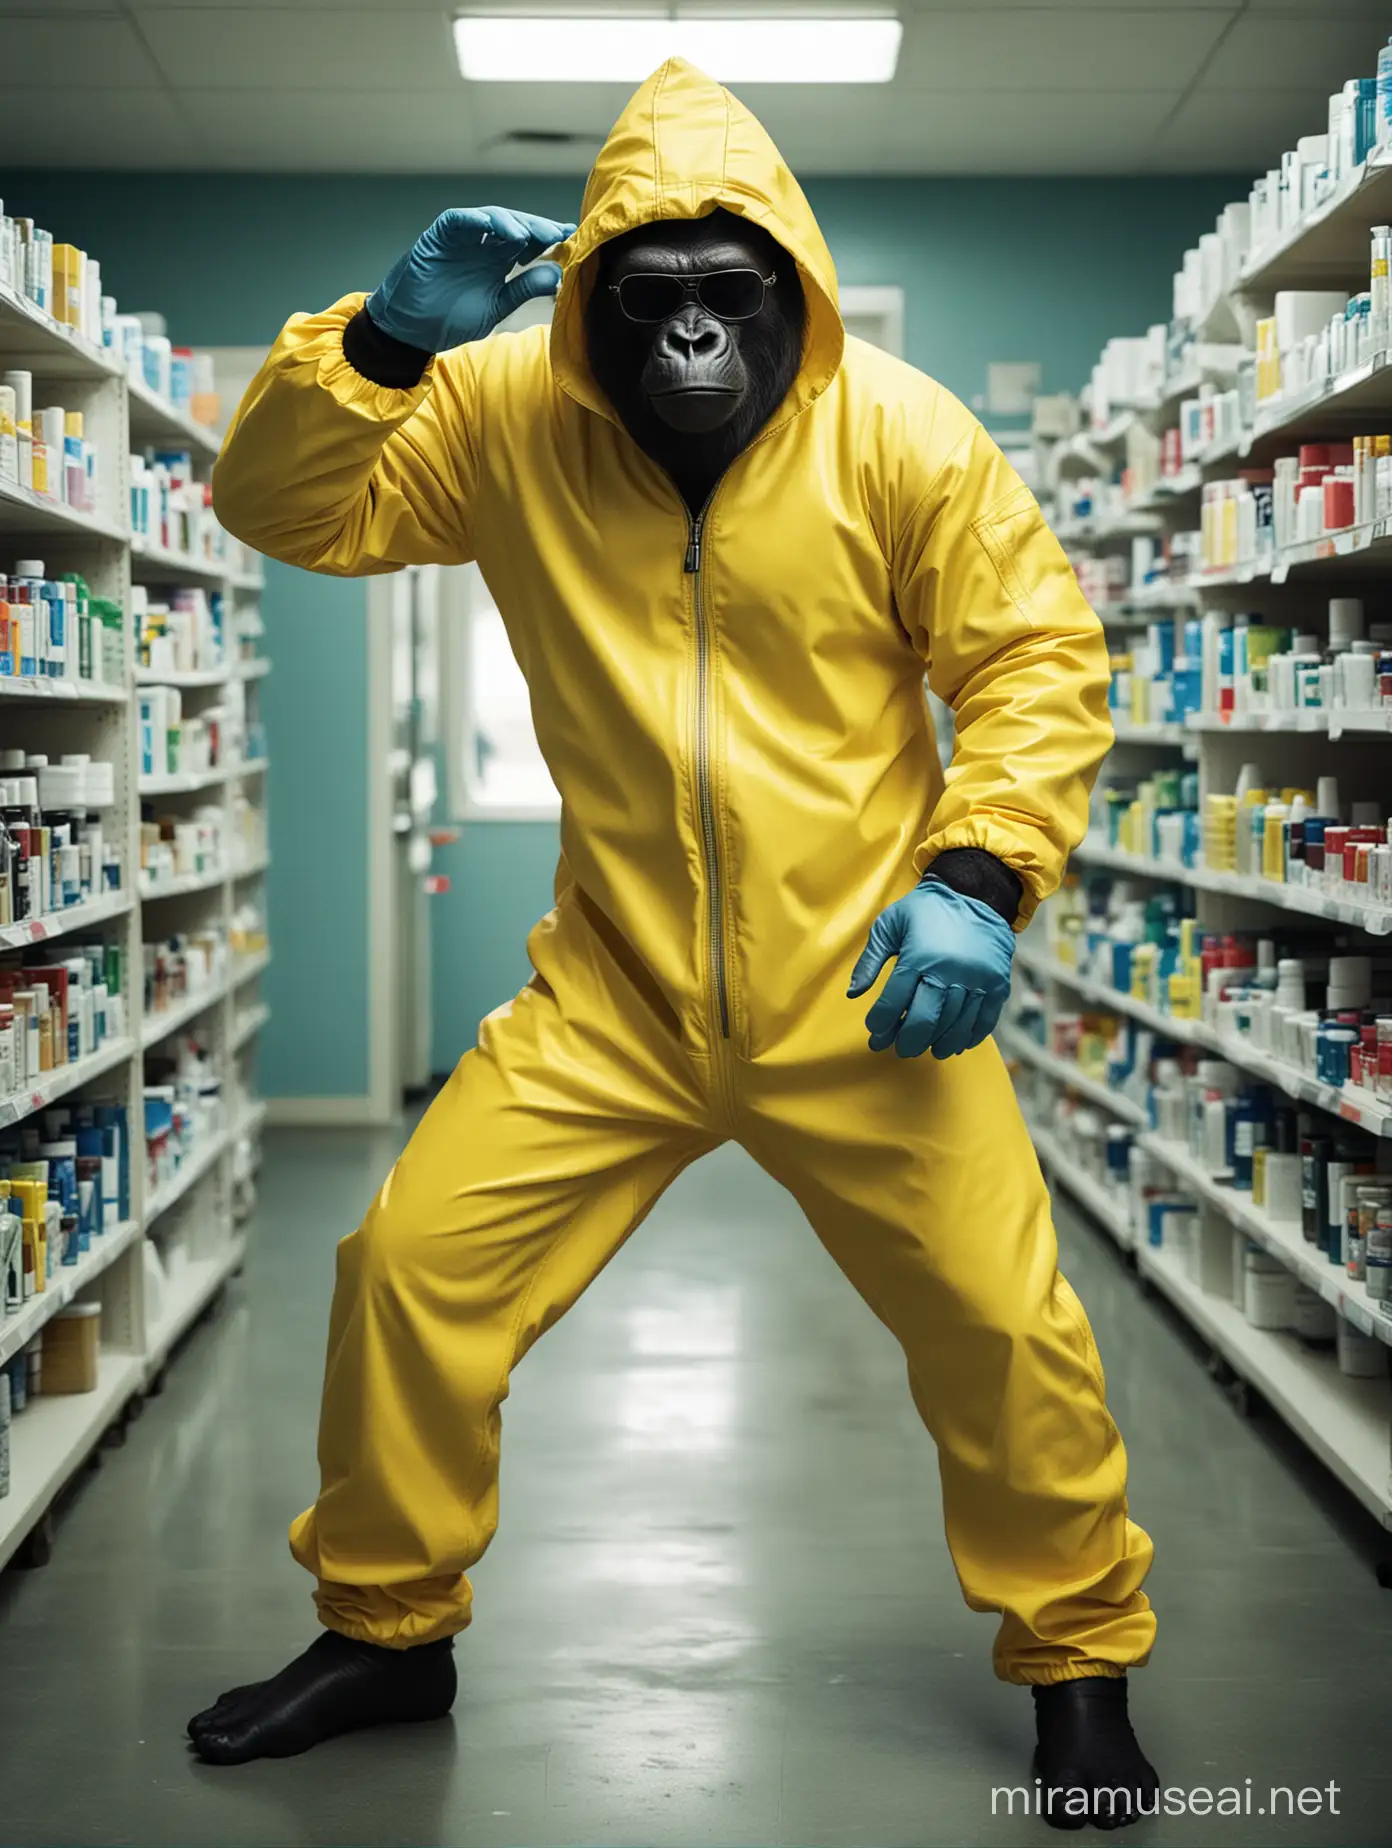 Dancing Gorilla in Breaking BadInspired Yellow Jumpsuit Amid Pharmacy Medication